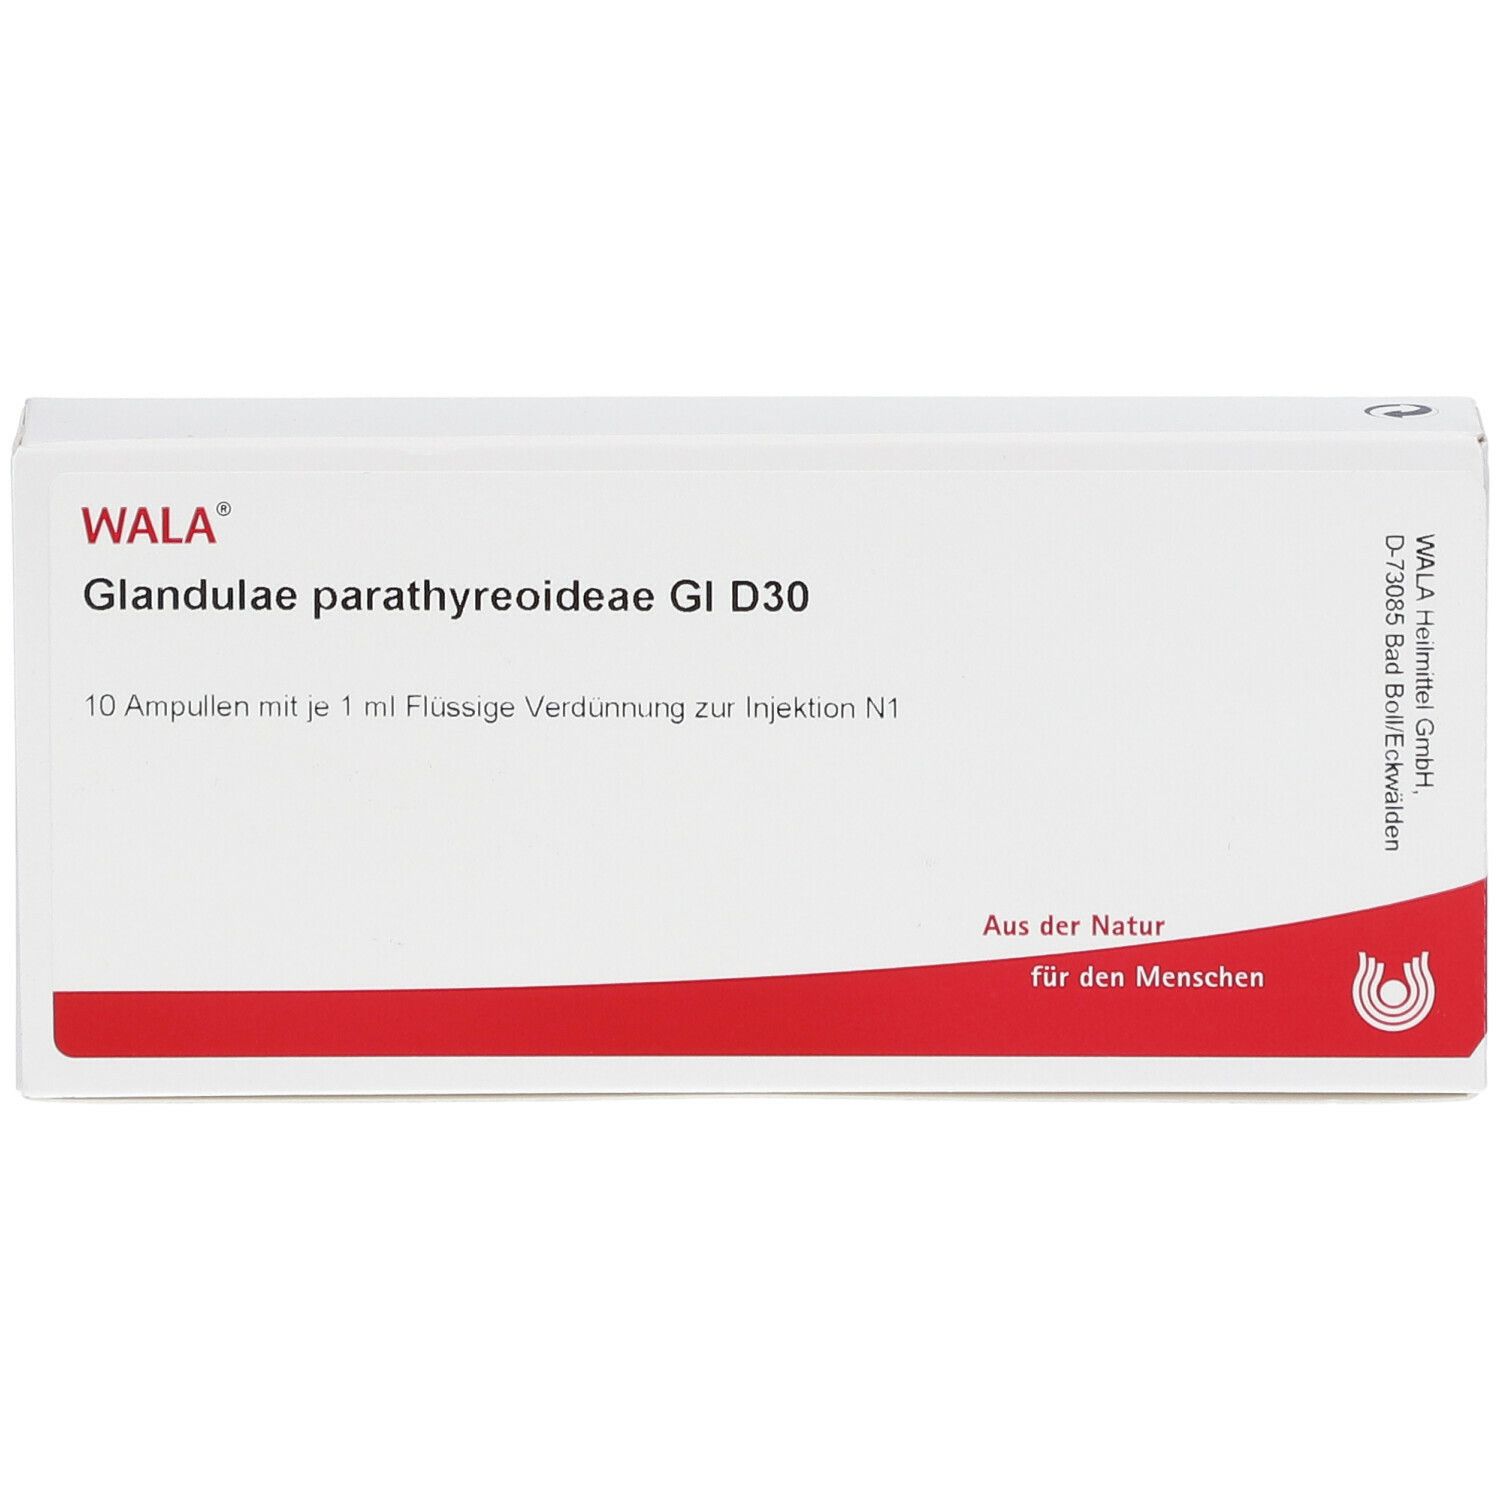 WALA® Glandulae parathyreoideae Gl D 30